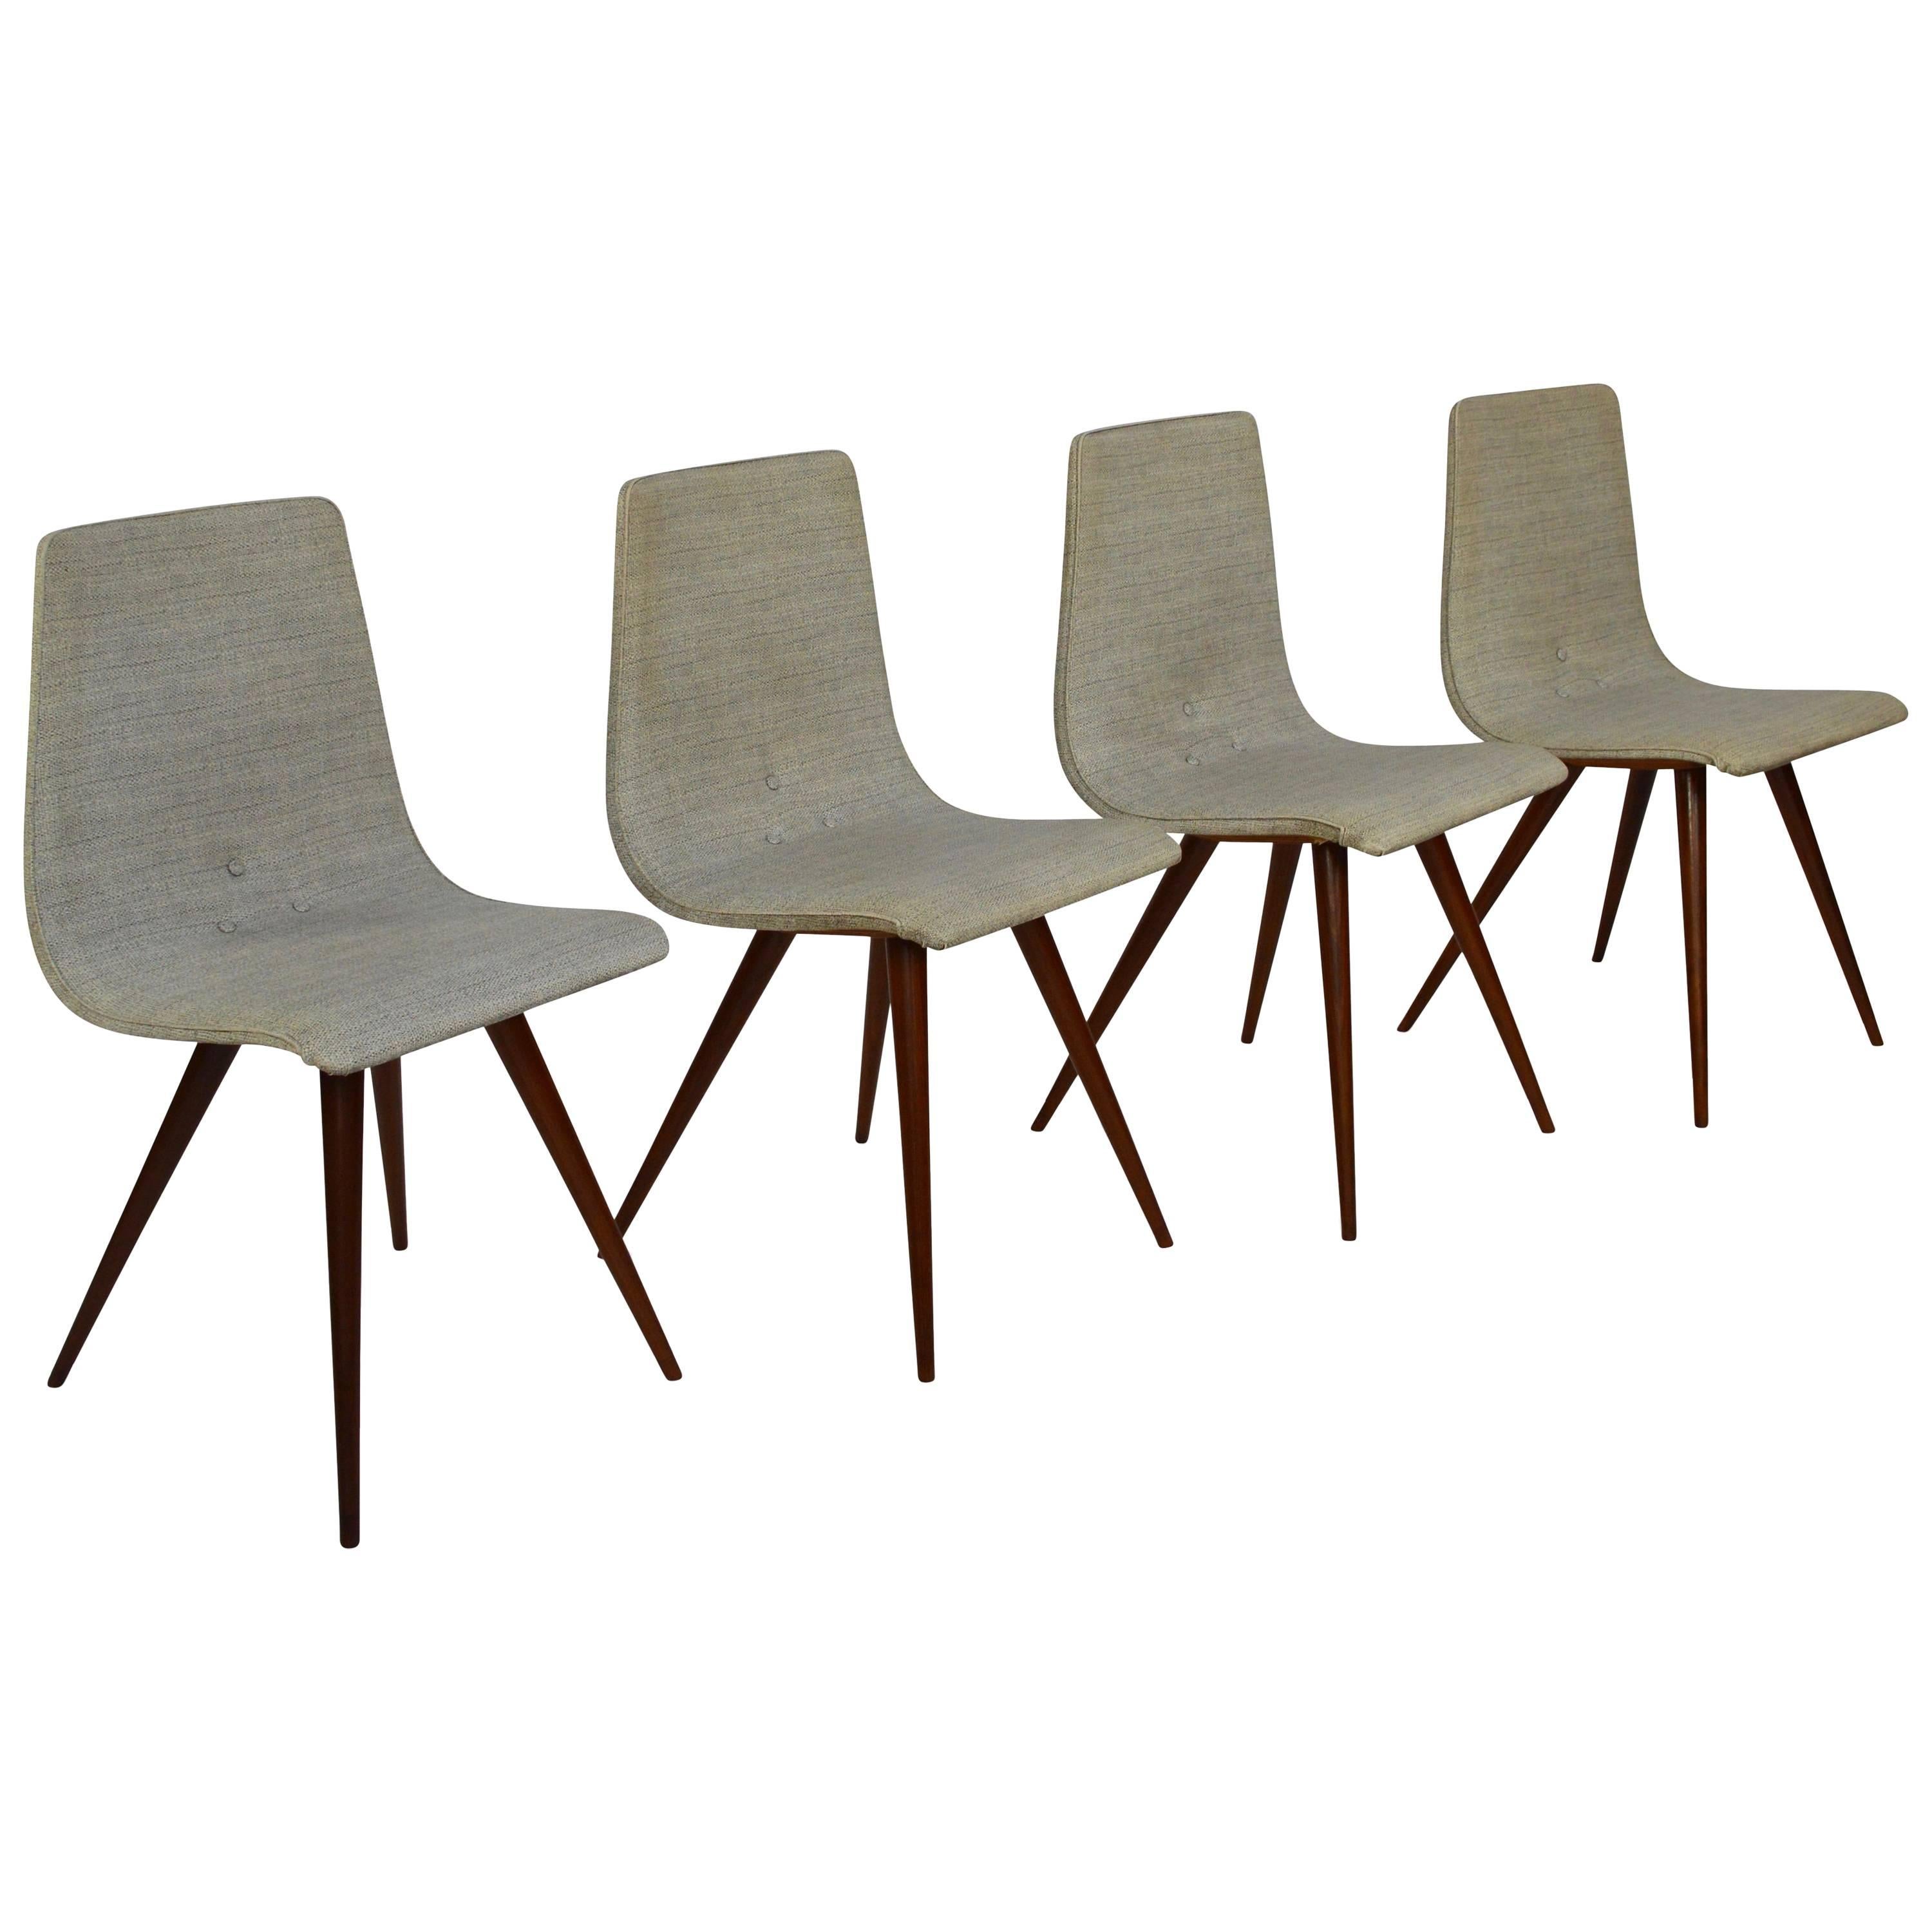 Elegant Set of Four Teak Spider Leg Dining Chairs, 1950s